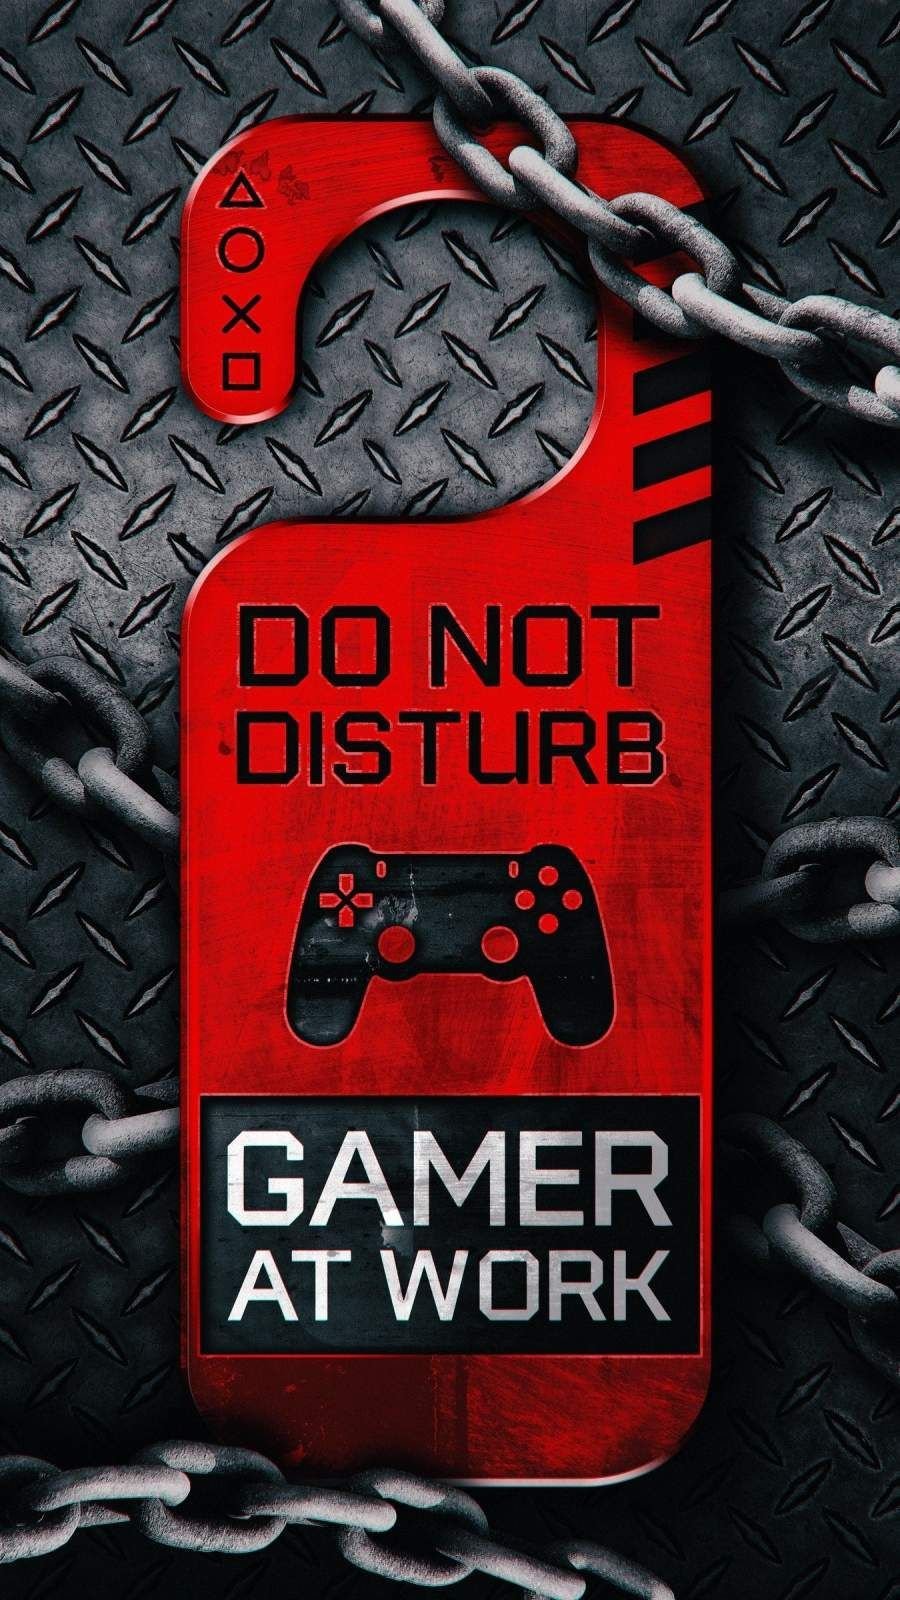 Gamer at work - do not disturb